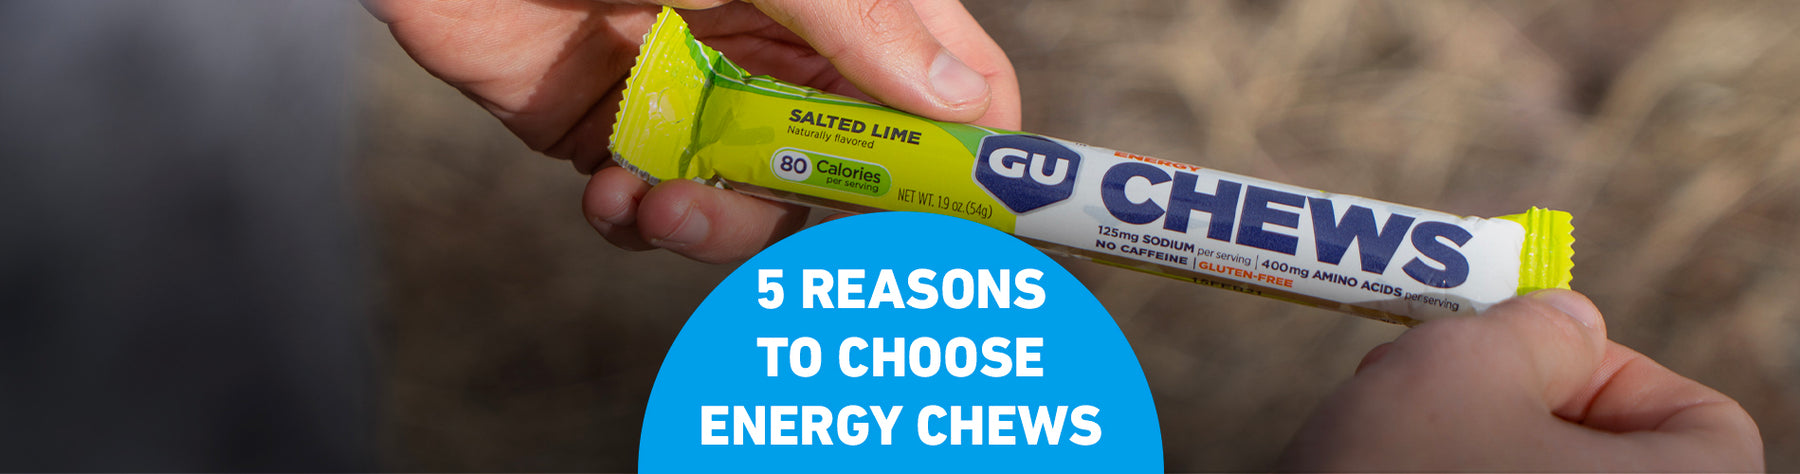 5 Reasons to choose Energy Chews